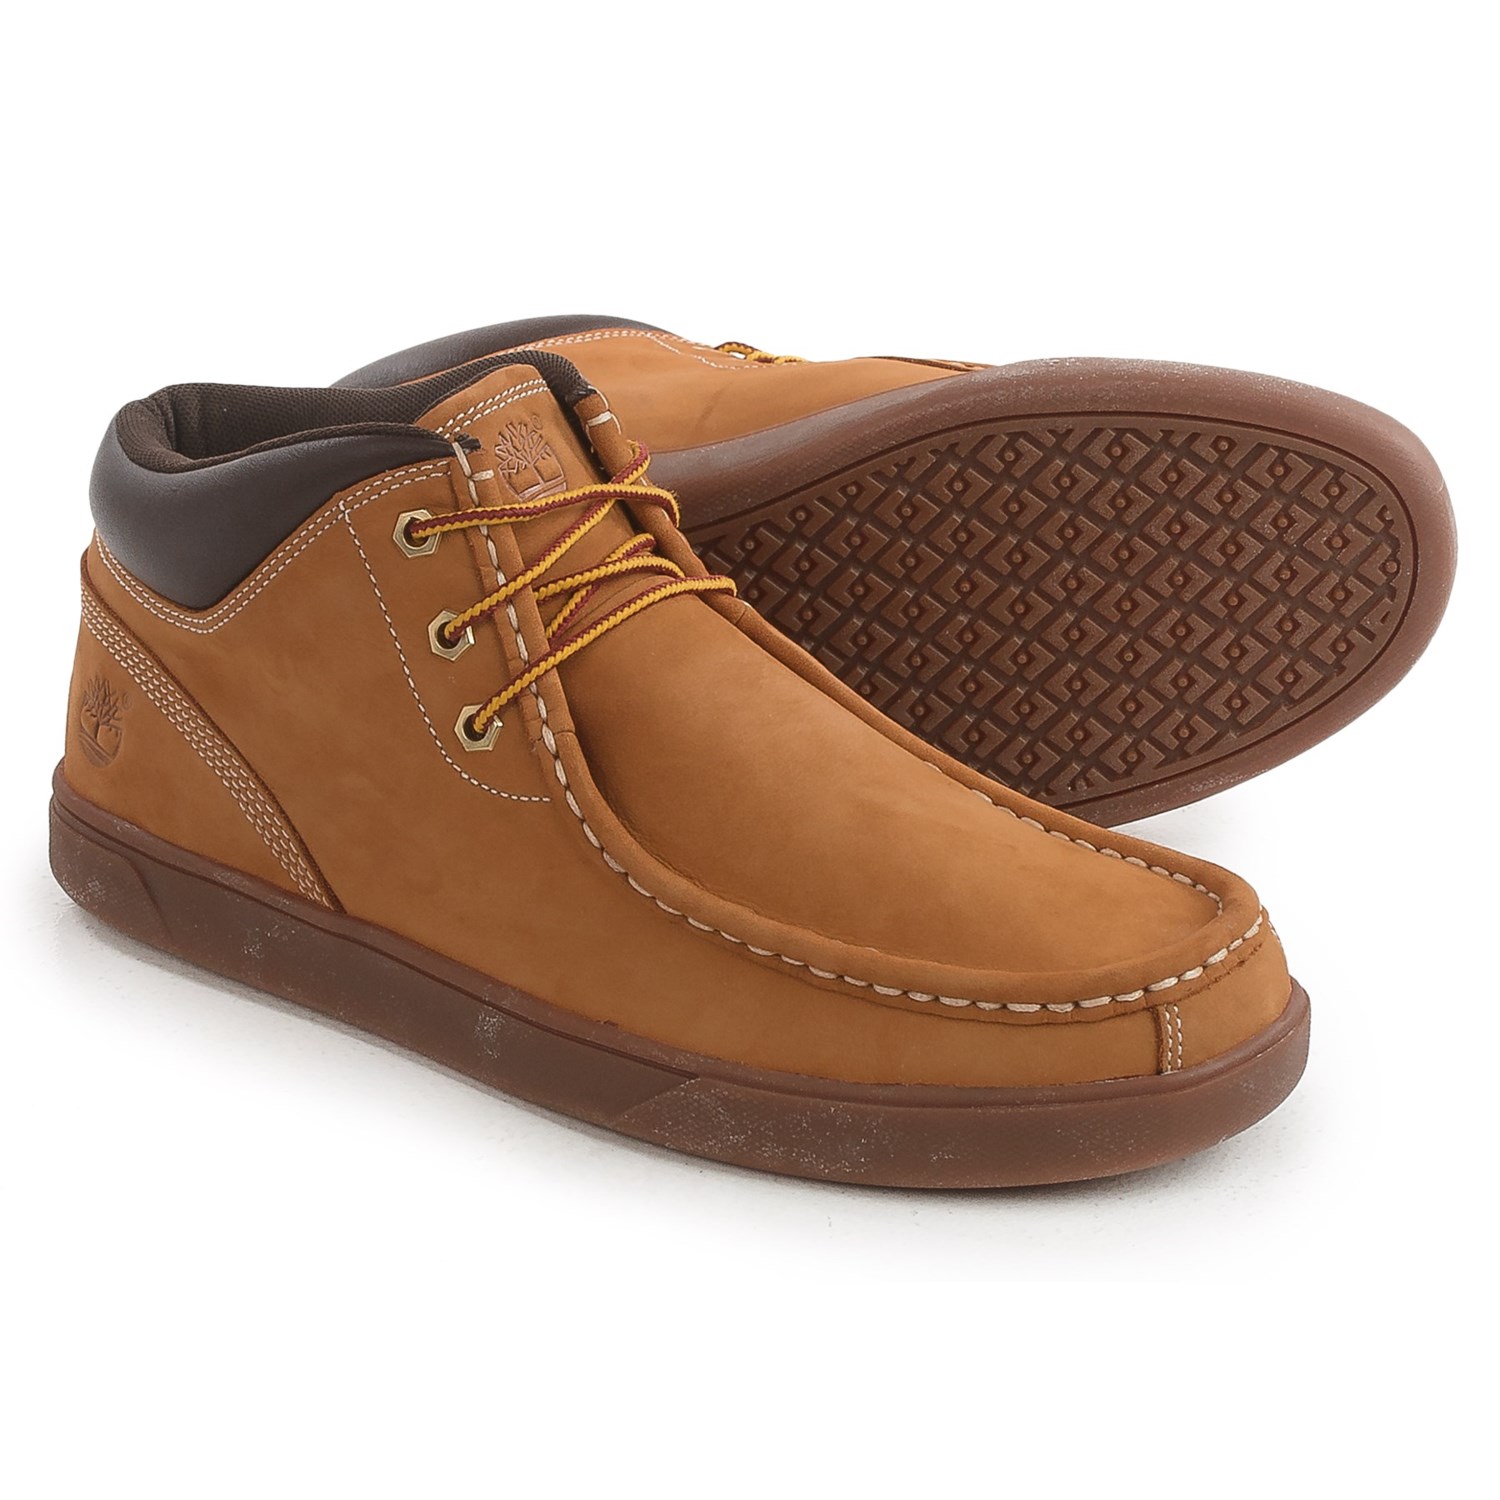 Timberland Groveton Moc-Toe Chukka Boots – Nubuck (For Men)